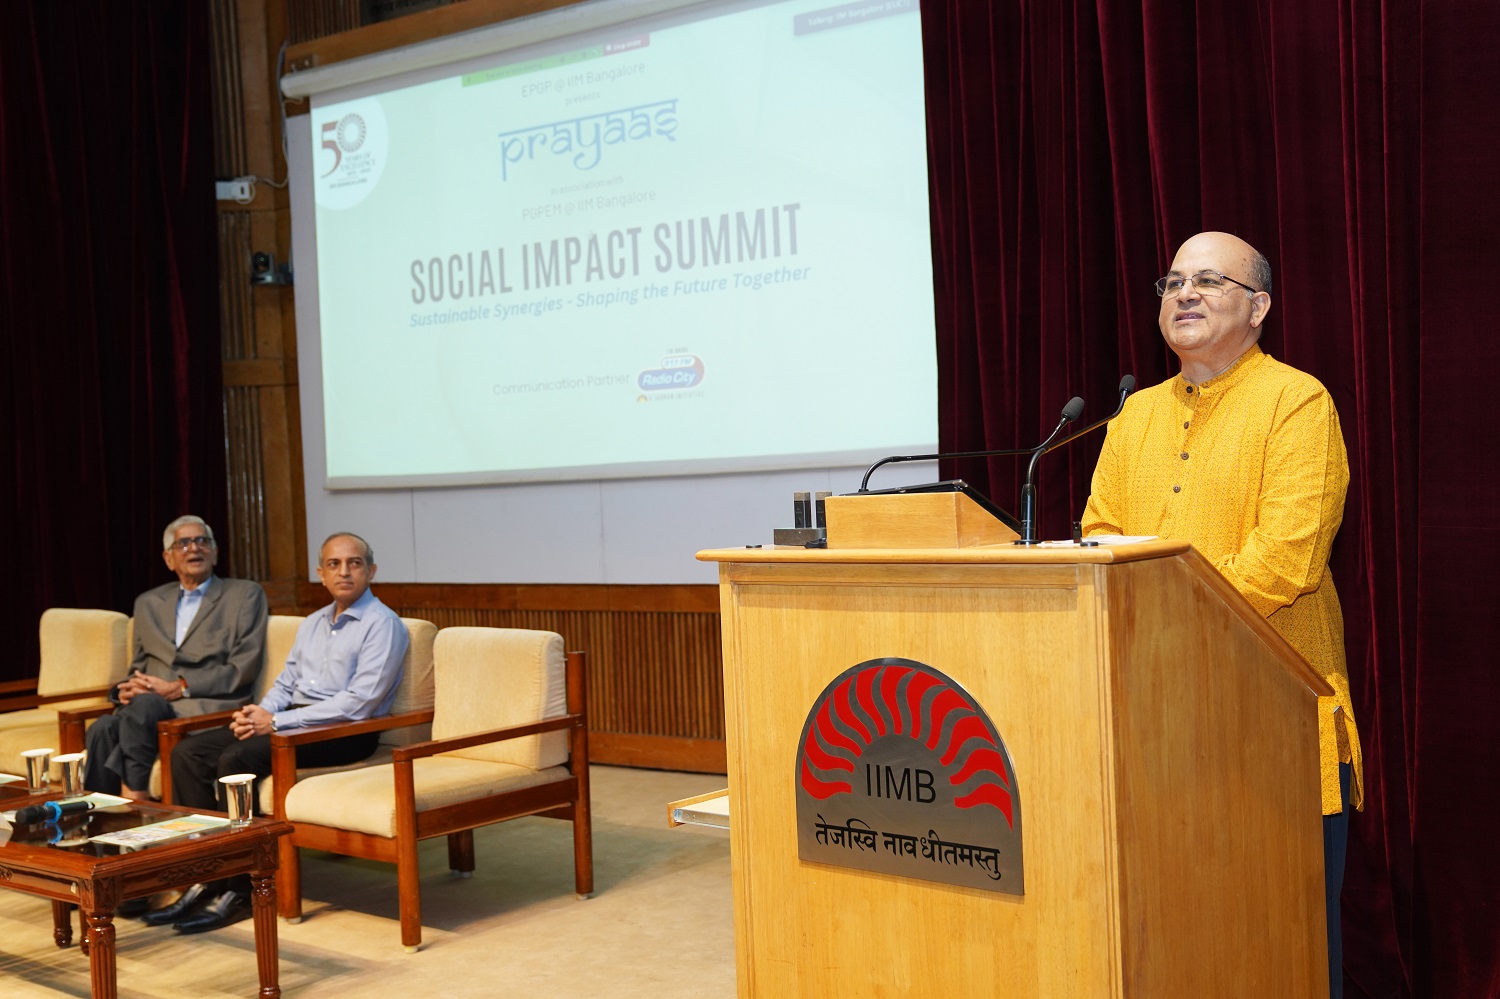 Prof. Rishikesha T Krishnan, Director, IIM Bangalore, delivers the welcome address at the social impact summit.